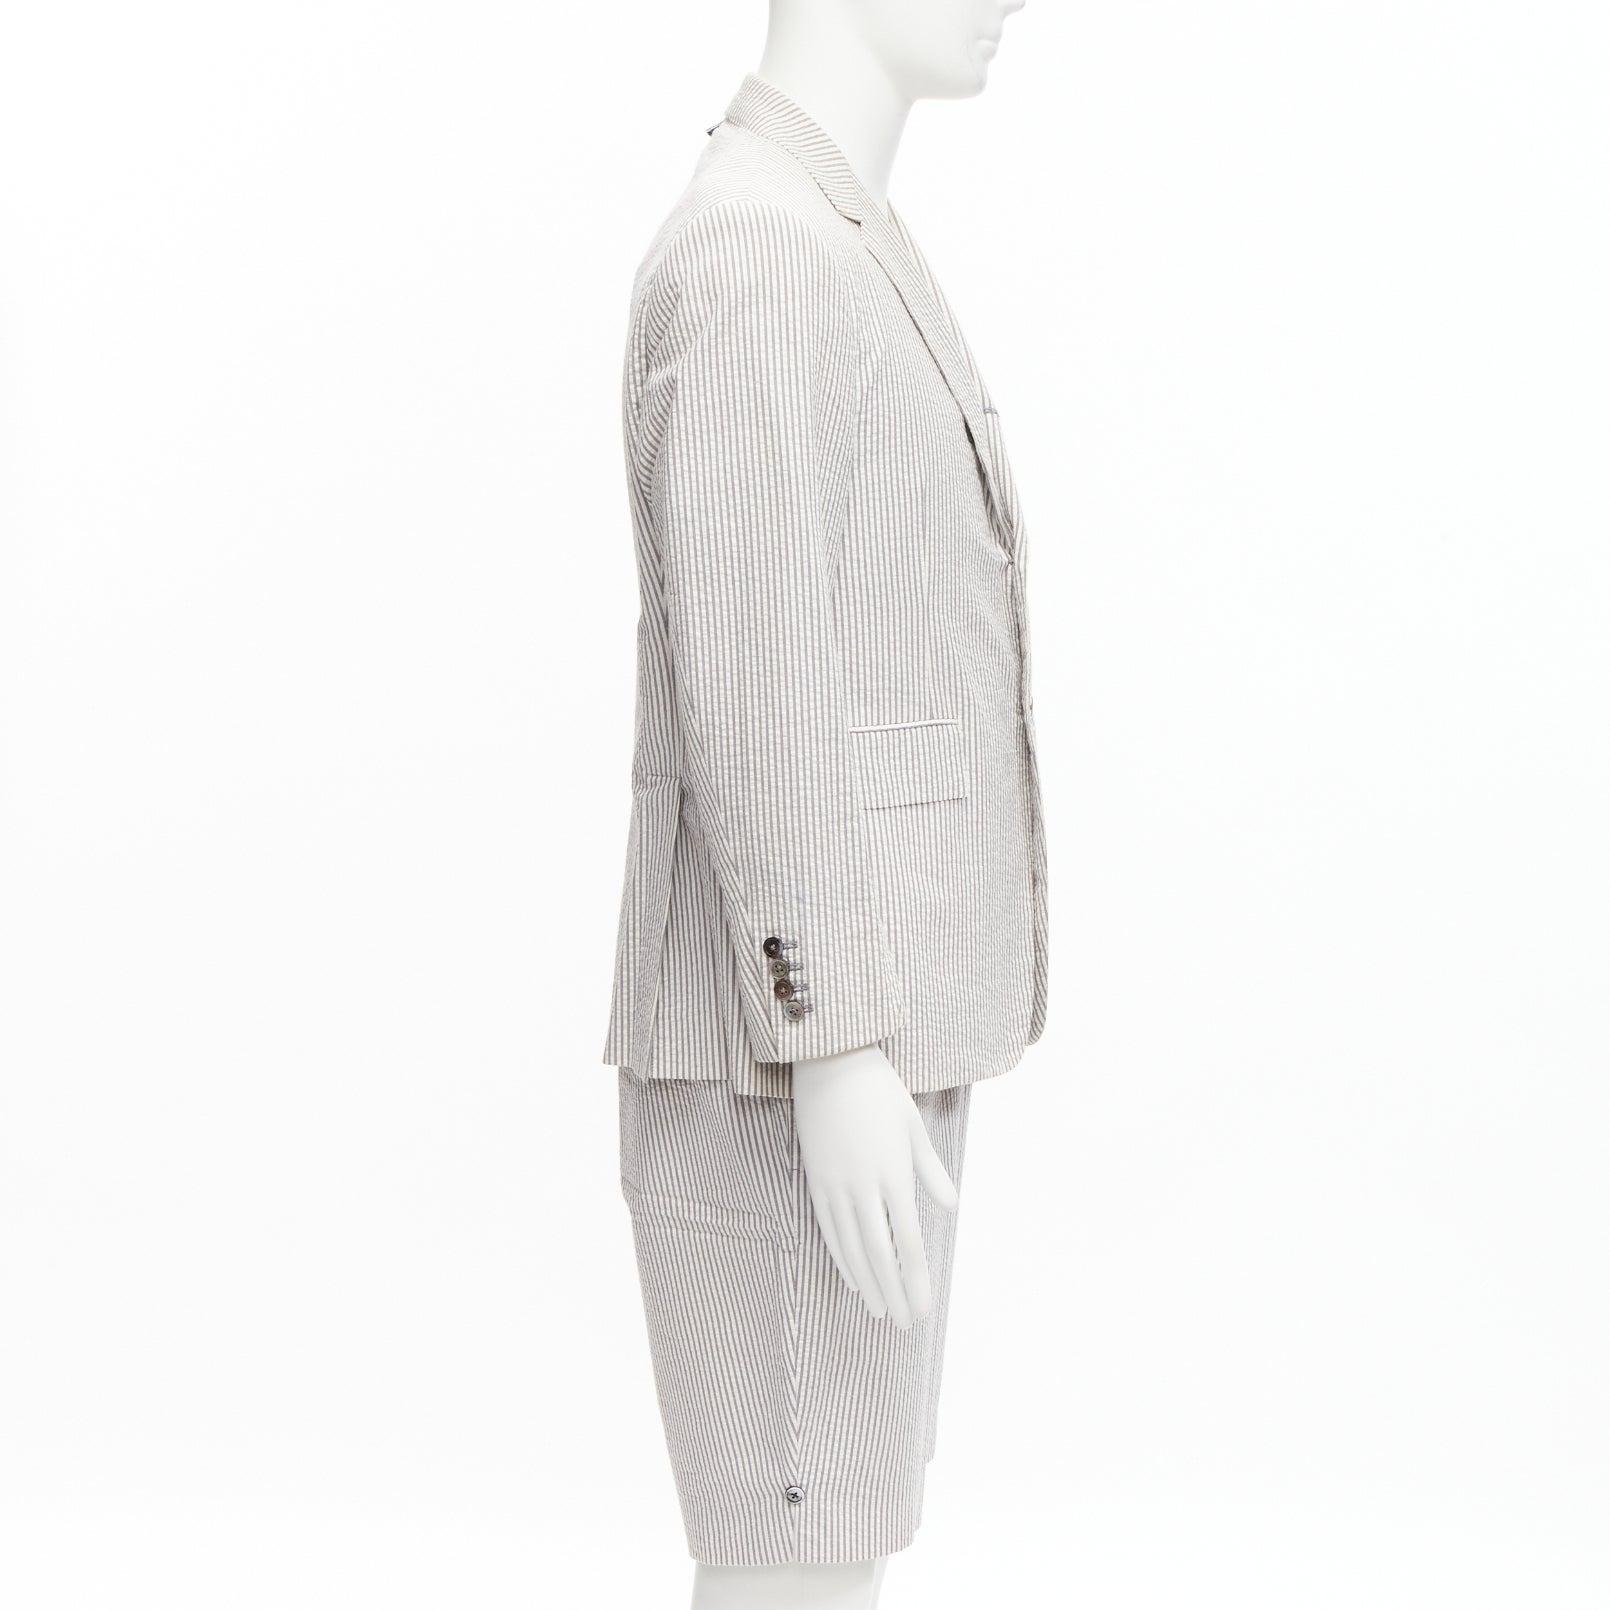 Men's THOM BROWNE grey white striped seersucker blazer jacket shorts suit Sz. 3 L For Sale